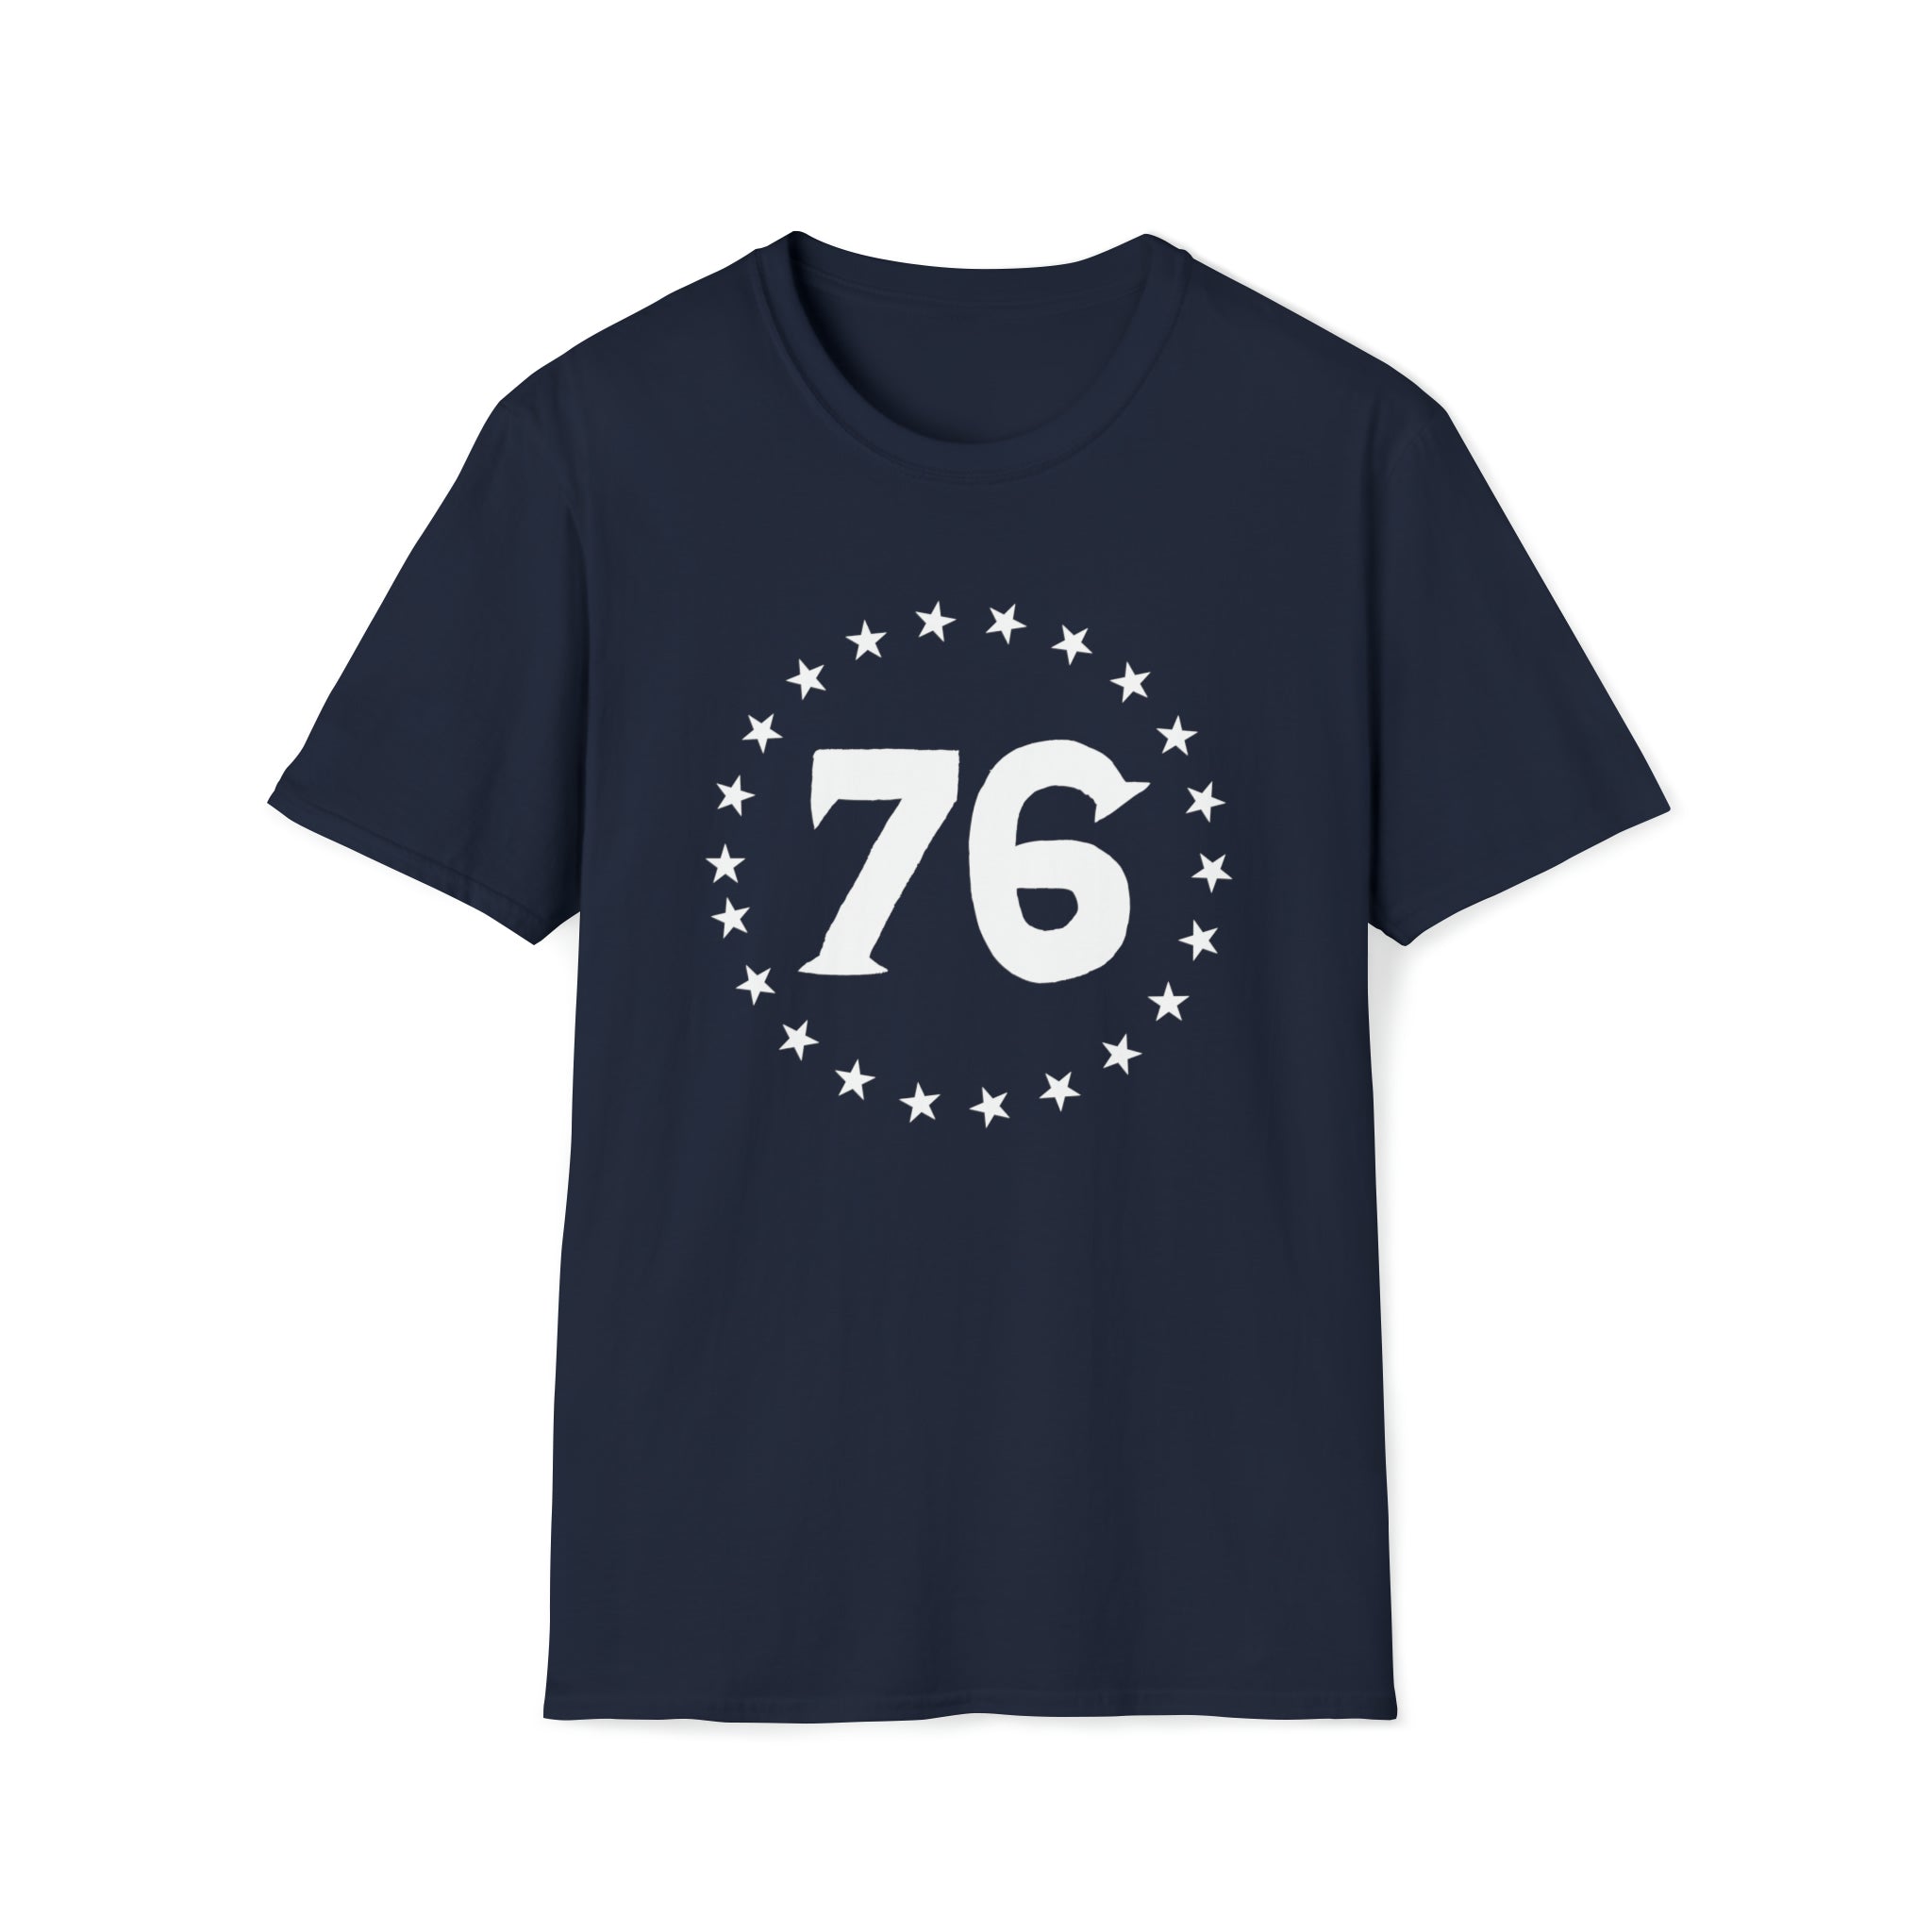 76 USA T-Shirt